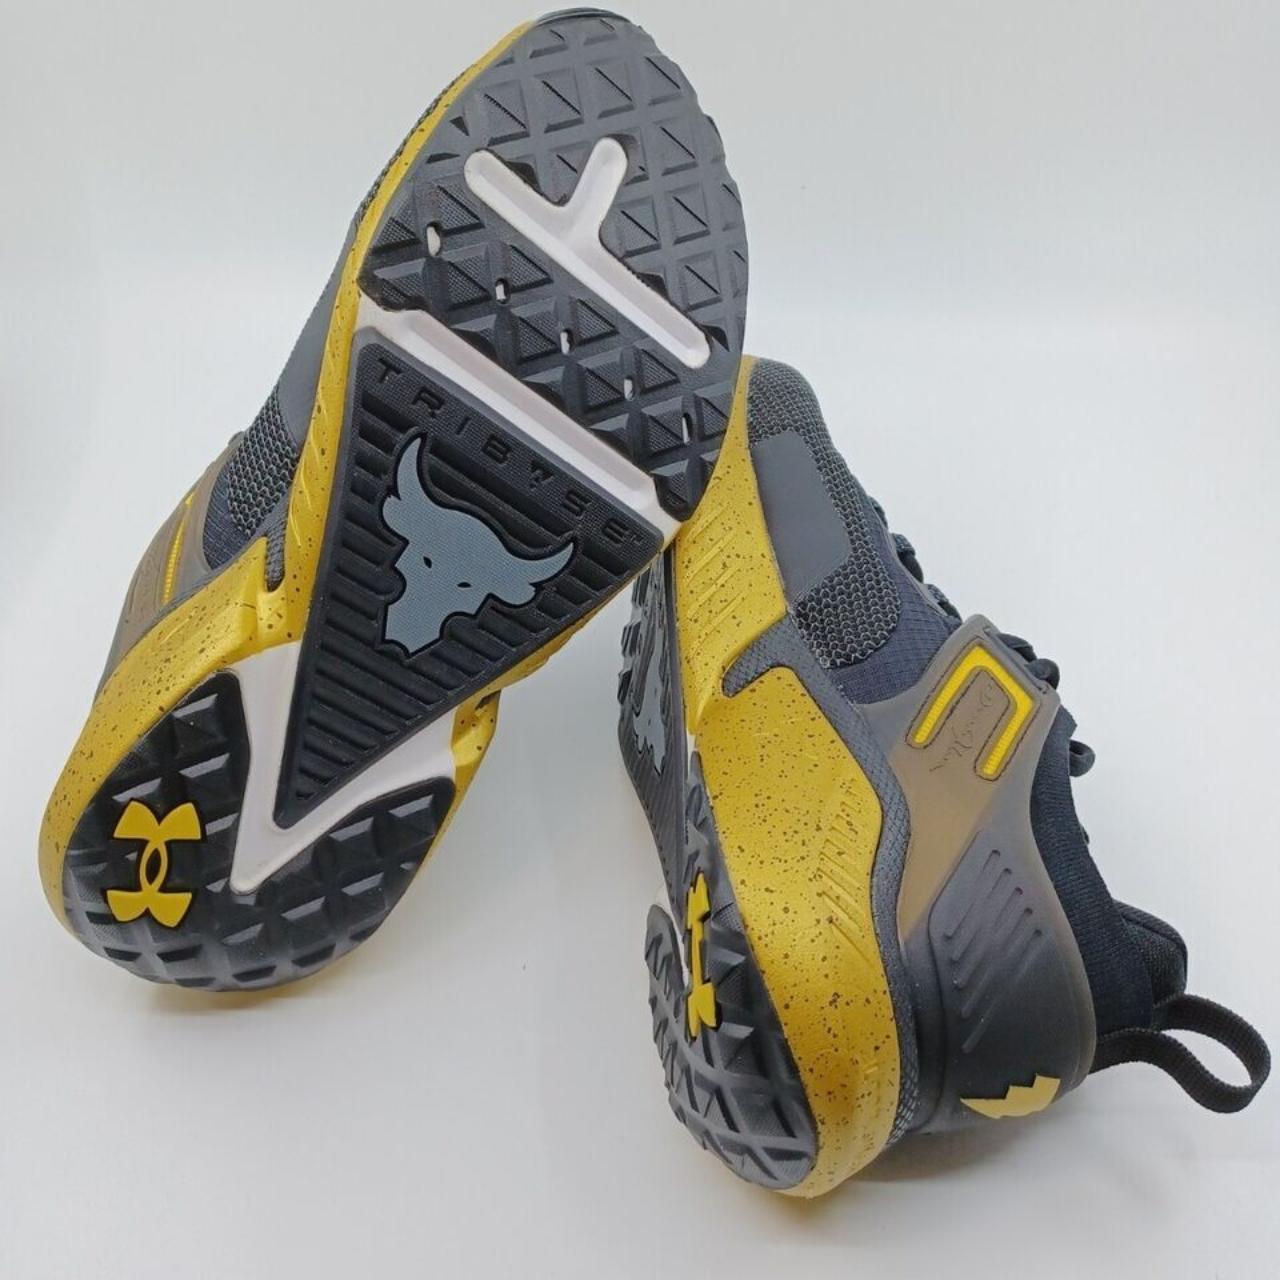 Under Armour Project Rock 5 Black Adam Sneakers Shoes US Size M8.5